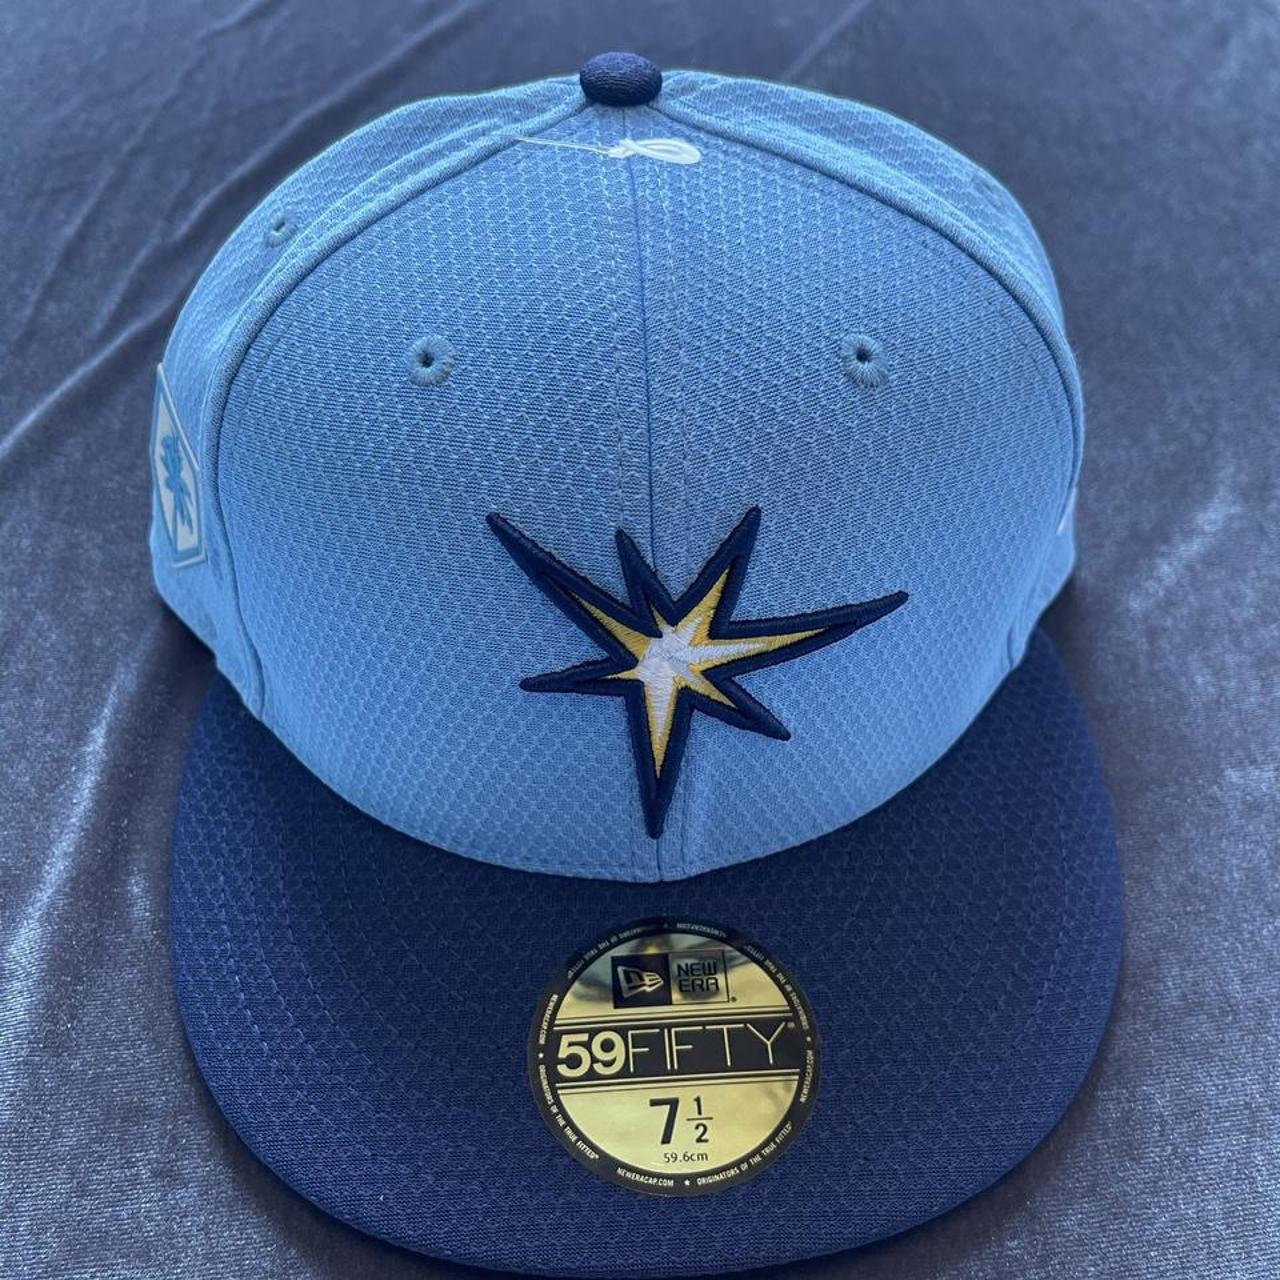 Tampa Bay Rays MLB New Era Diamond Era 59Fifty Fitted Hat